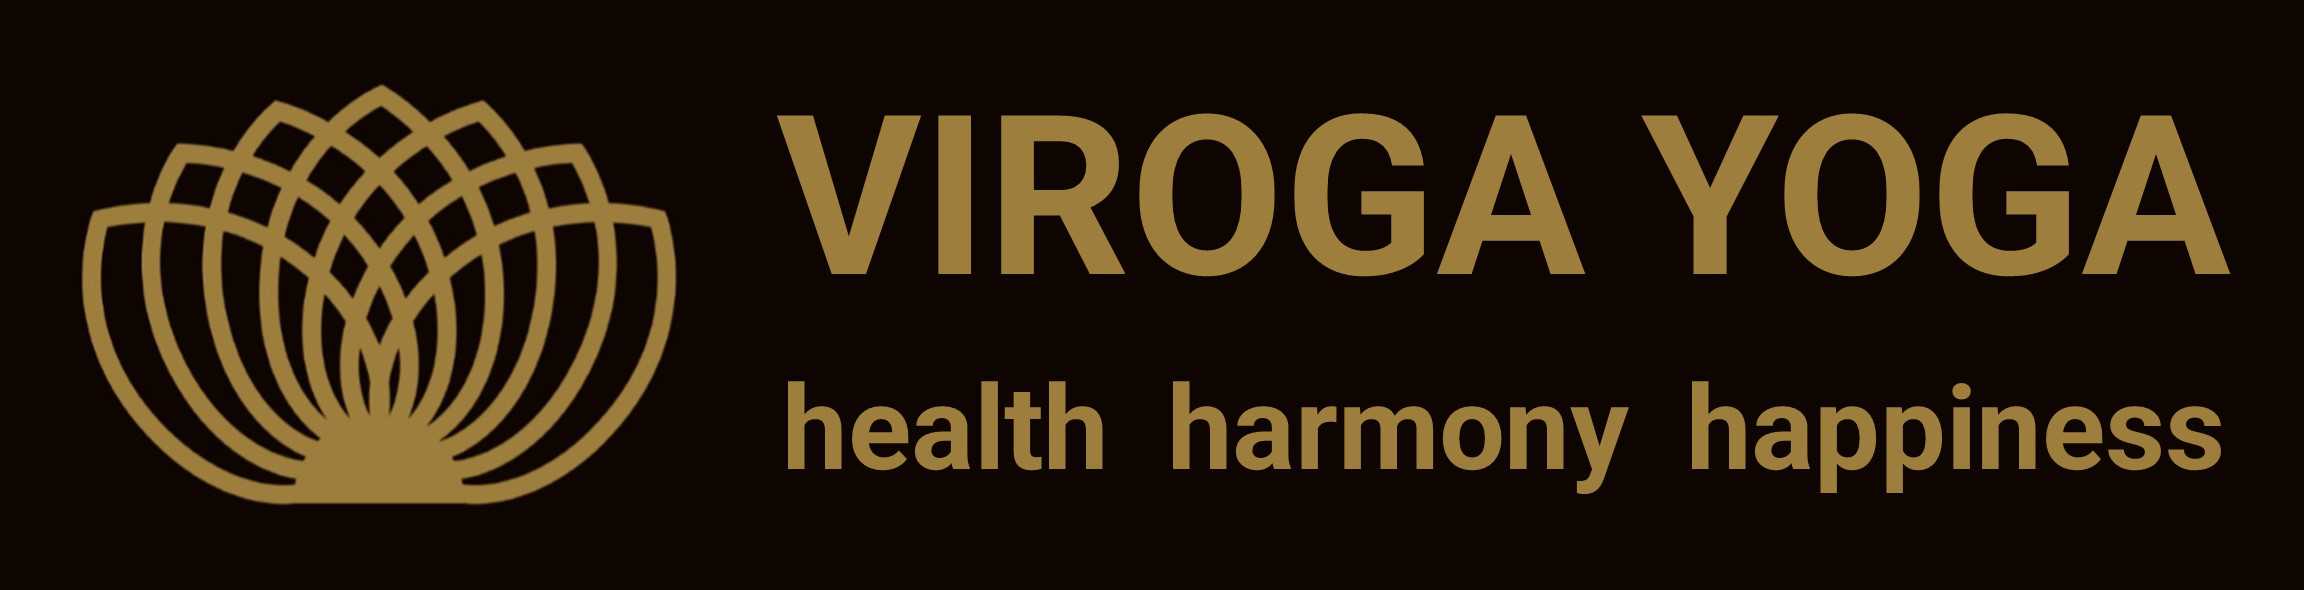 Viroga Yoga